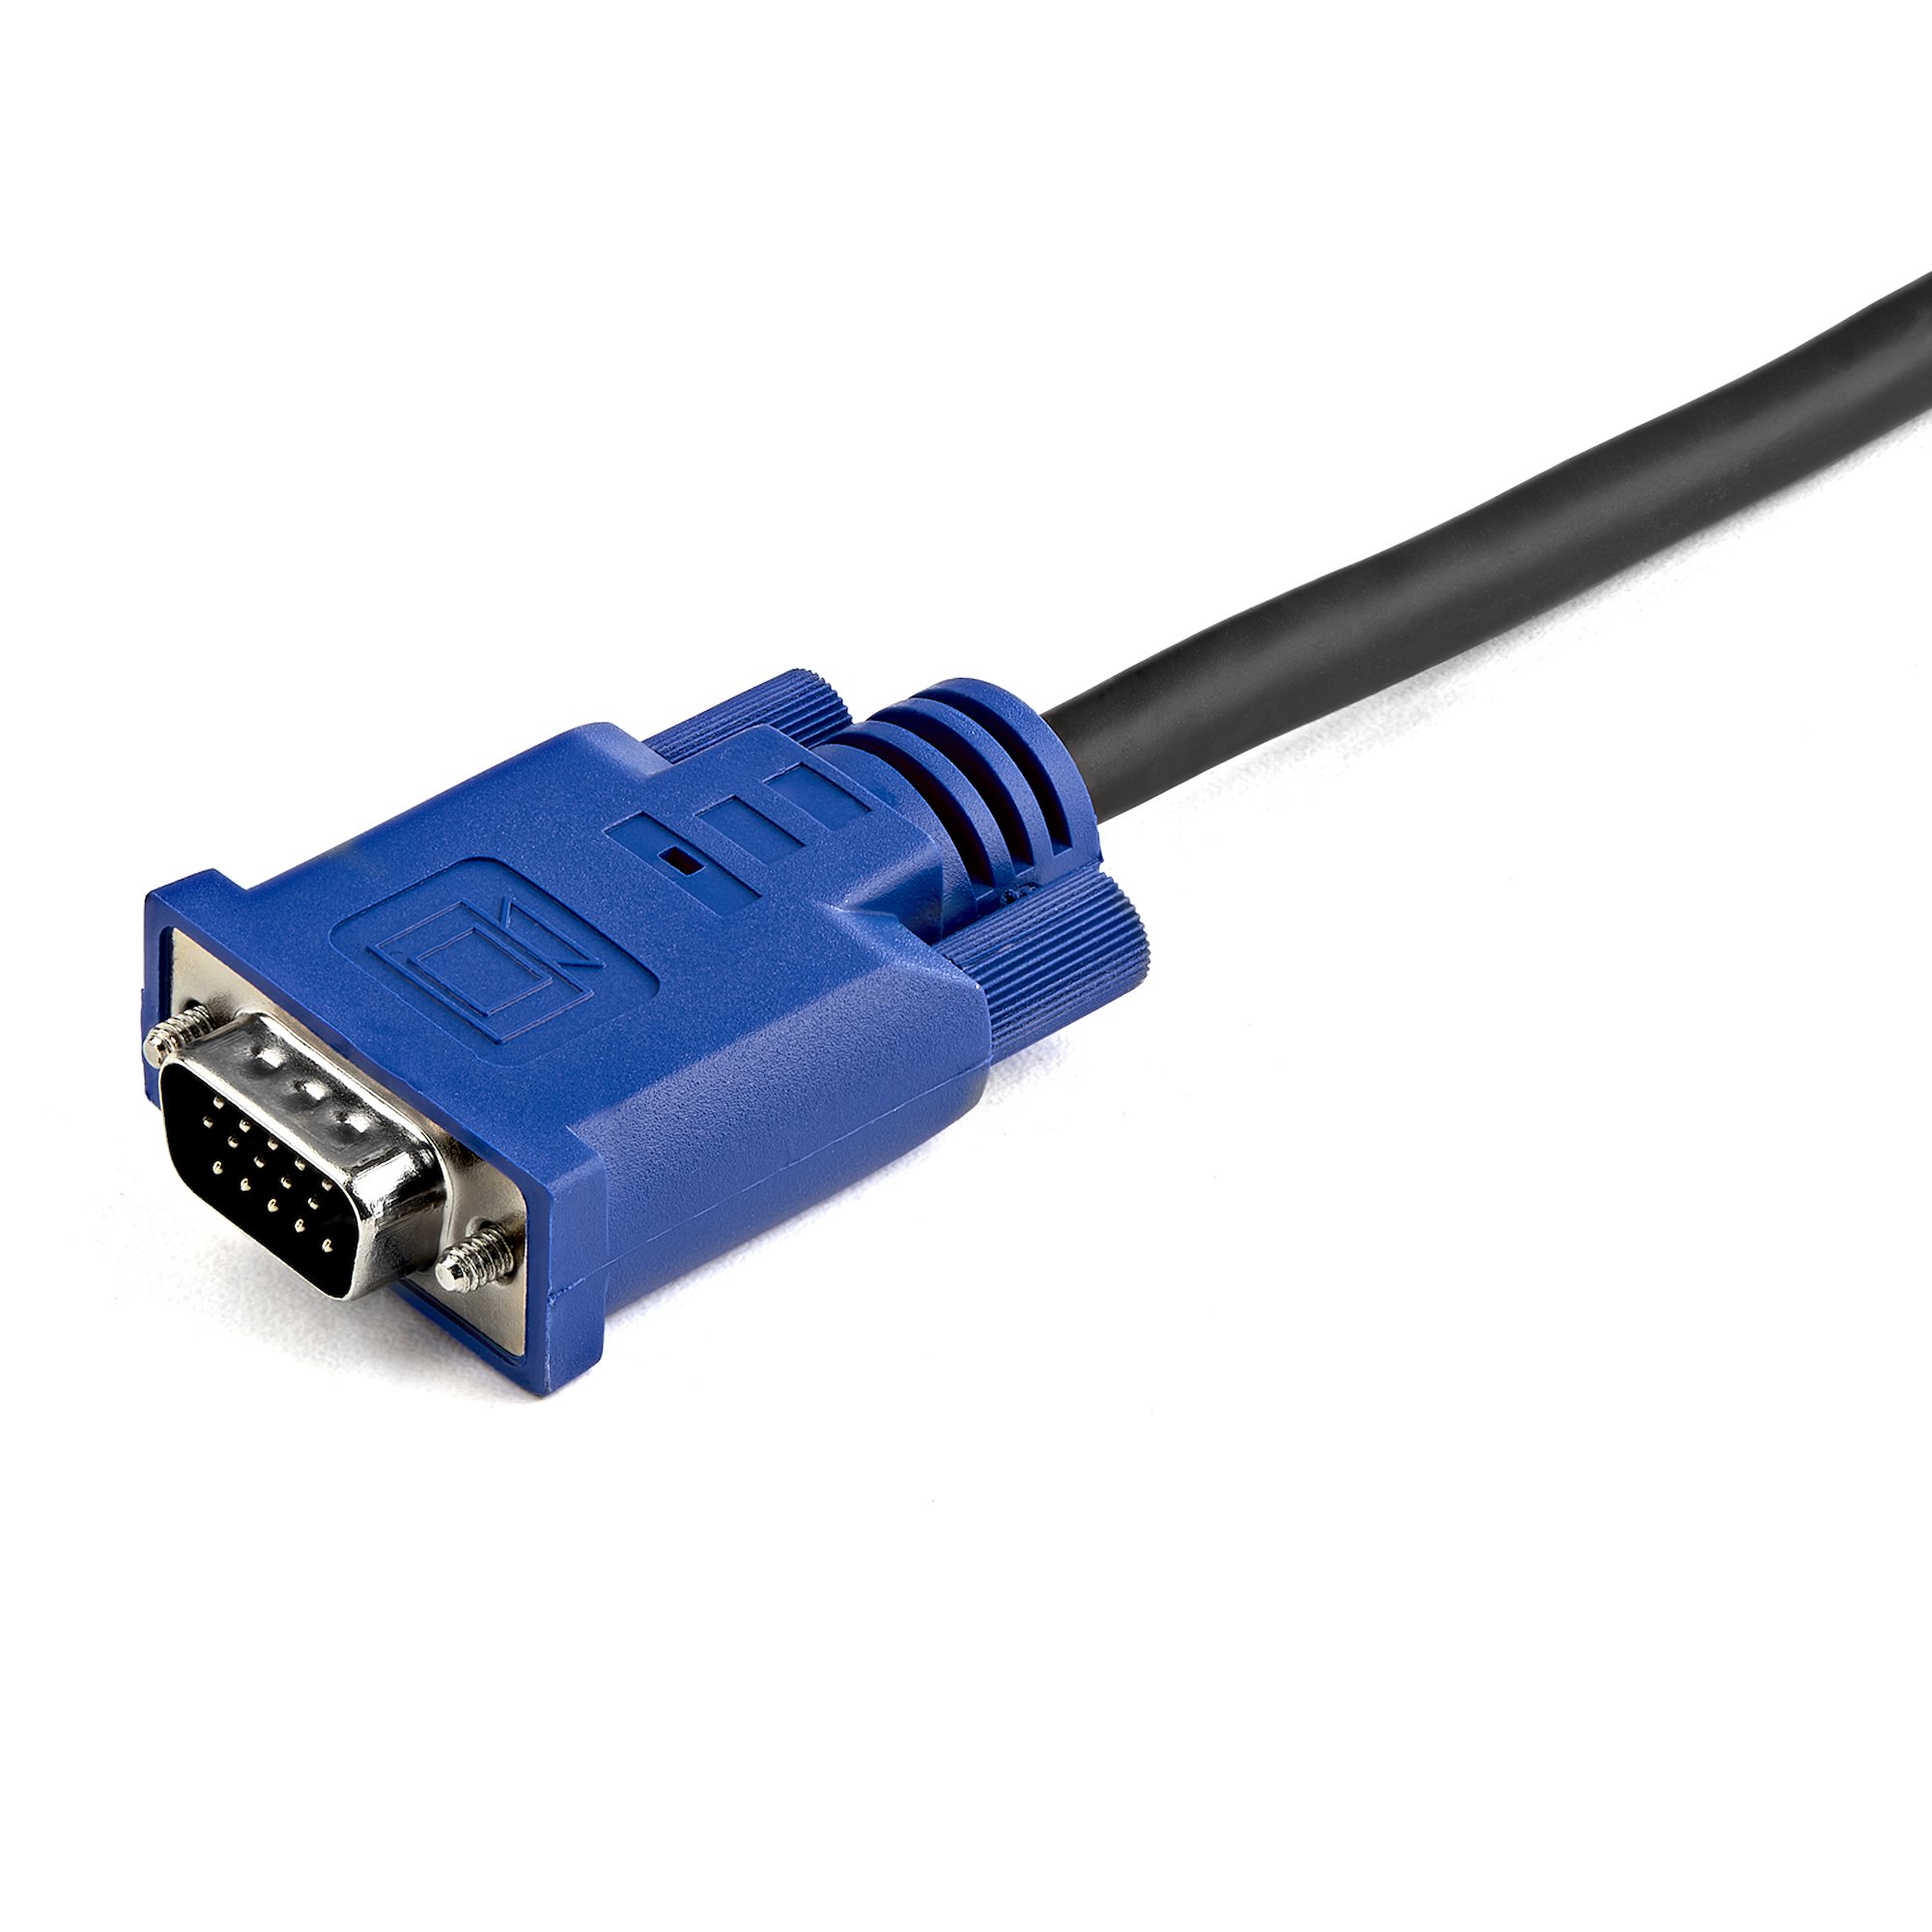 Inch-1 KVM Cable StarTech.com SVECONUS10 Ultra Thin USB VGA 2